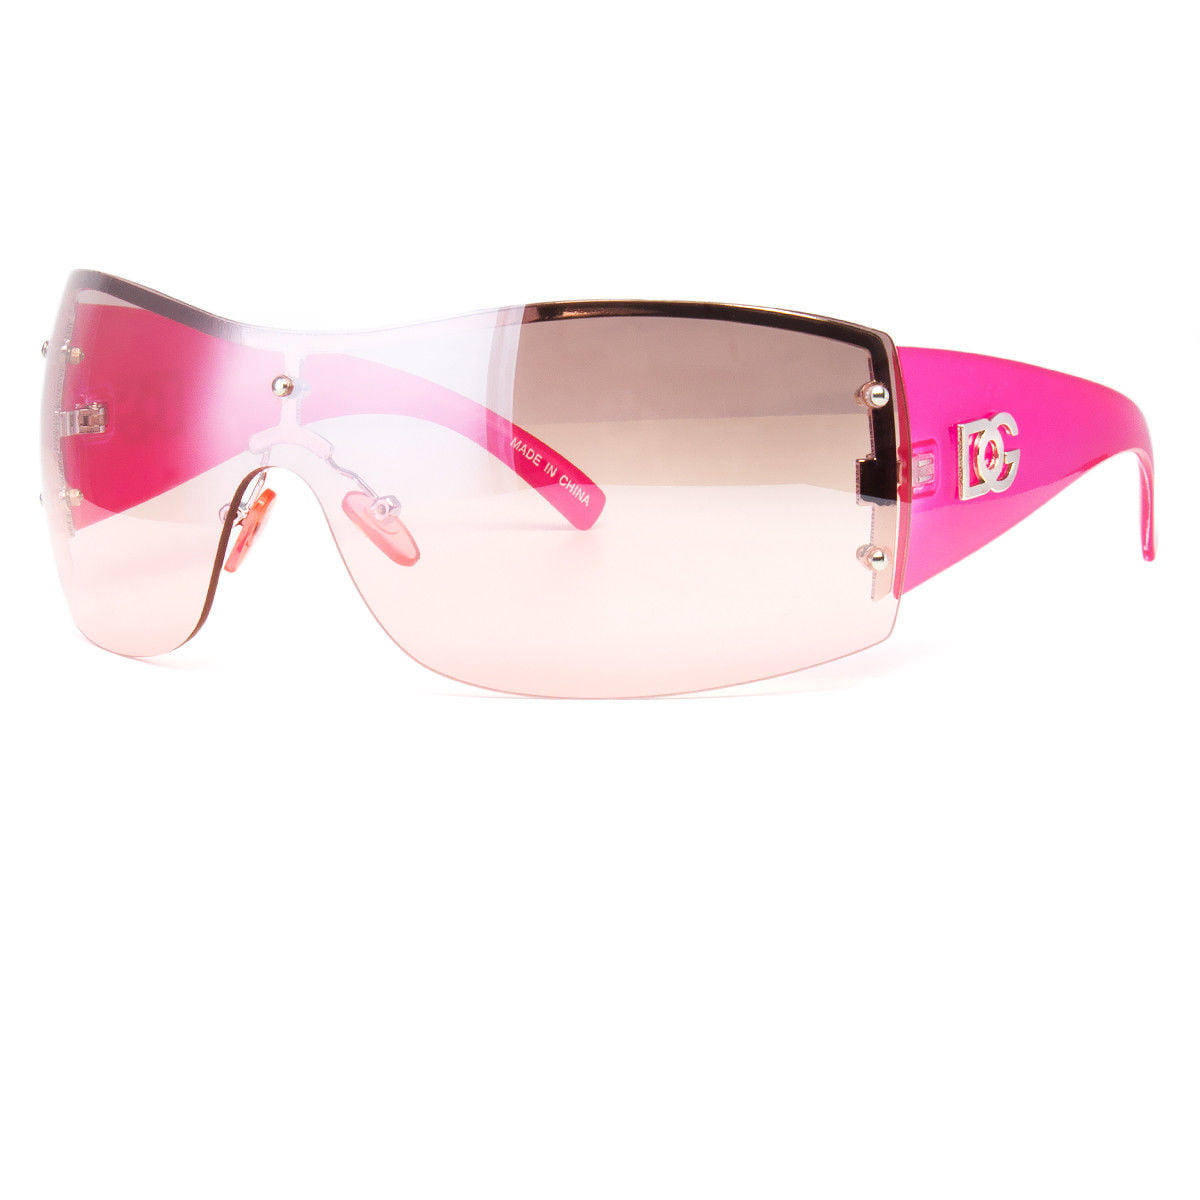 DG Eyewear Oversized Square Men's Women's Flat Top Sunglasses Shield Style Lens